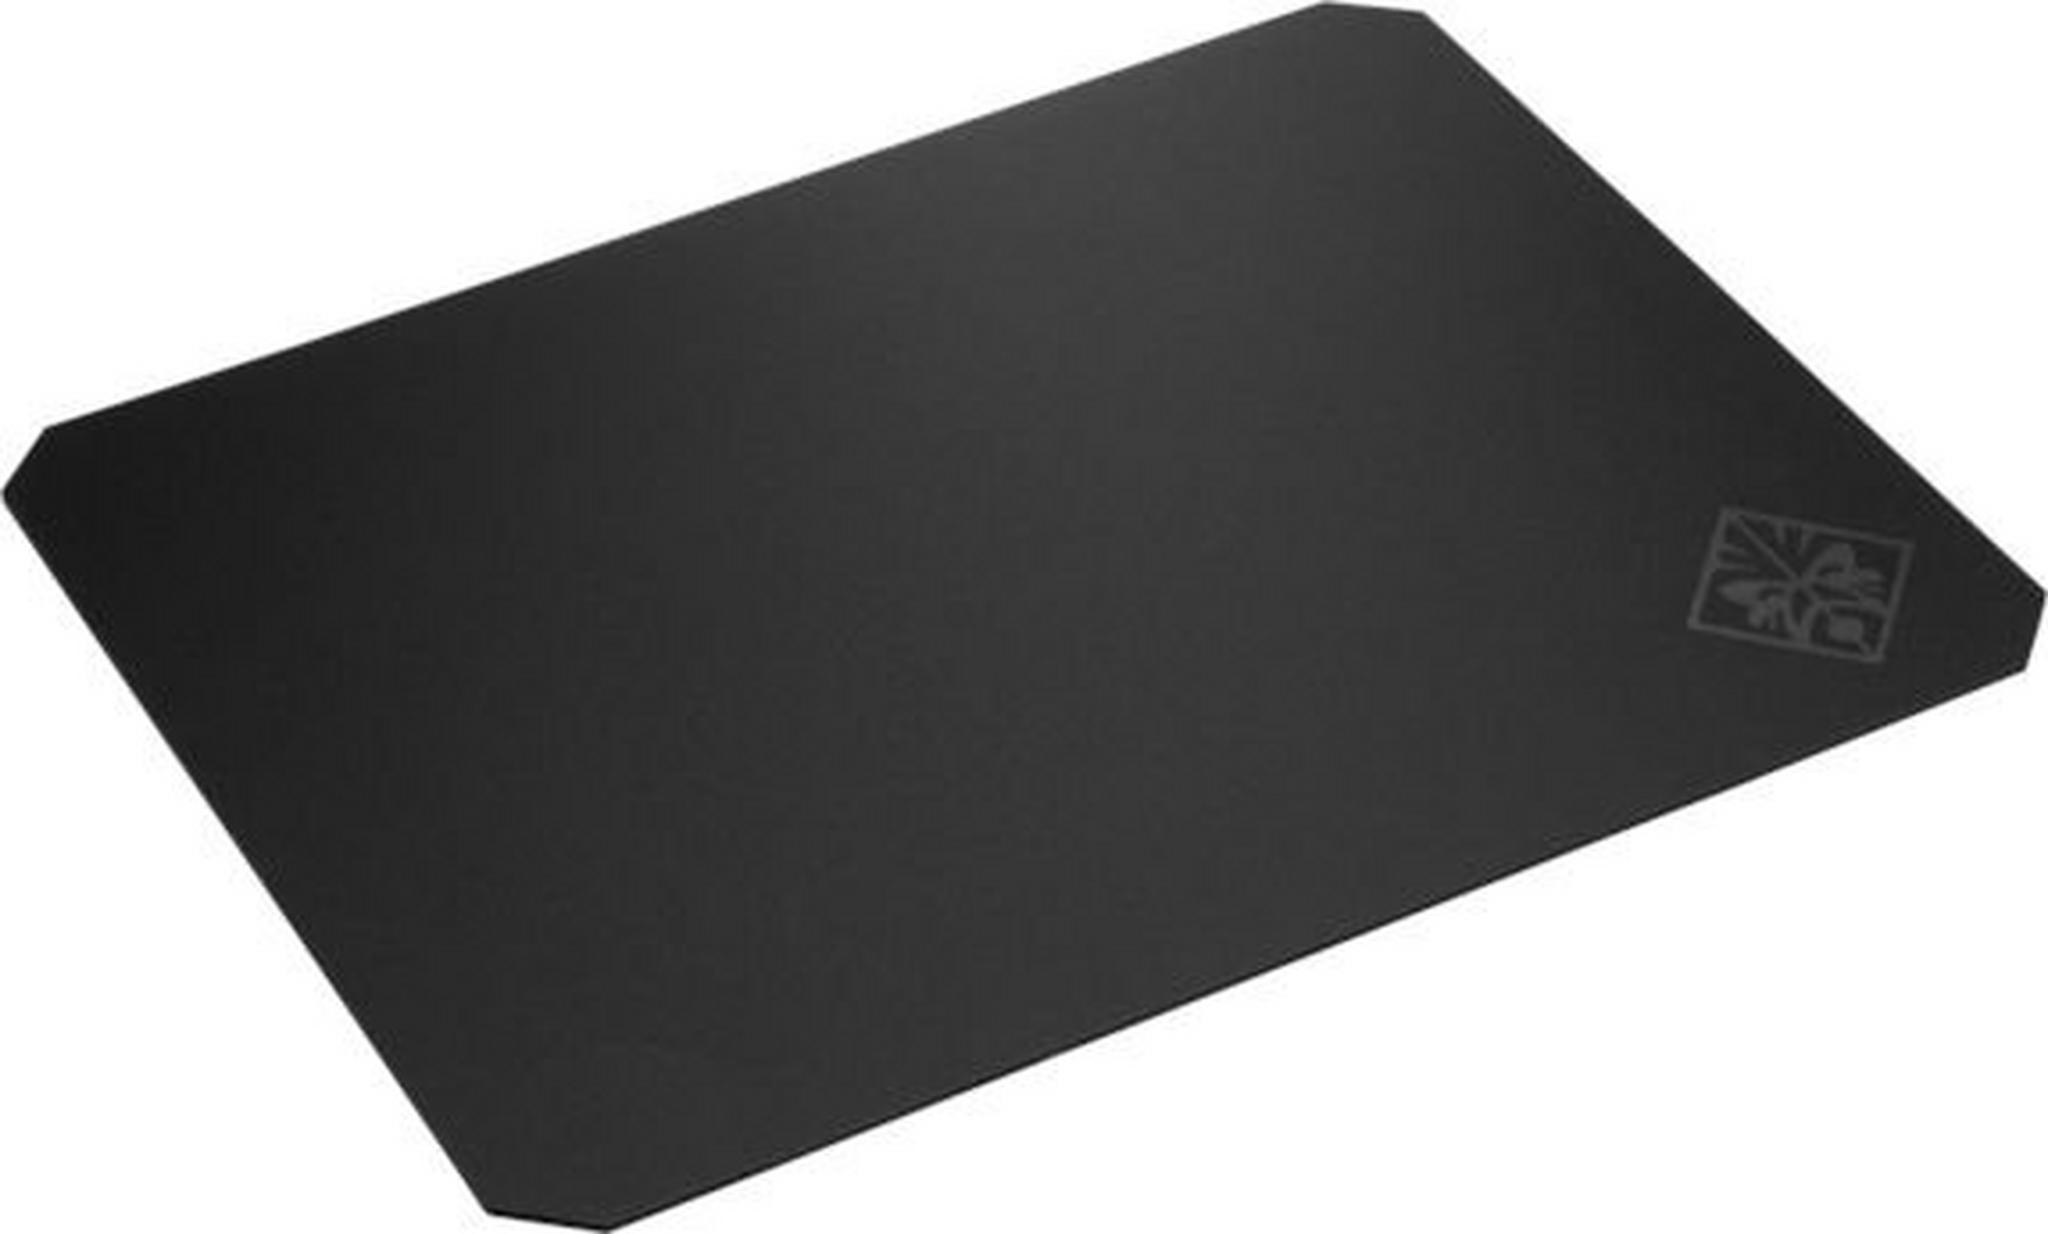 HP Omen 200 Gaming Hard Mouse Pad - Black